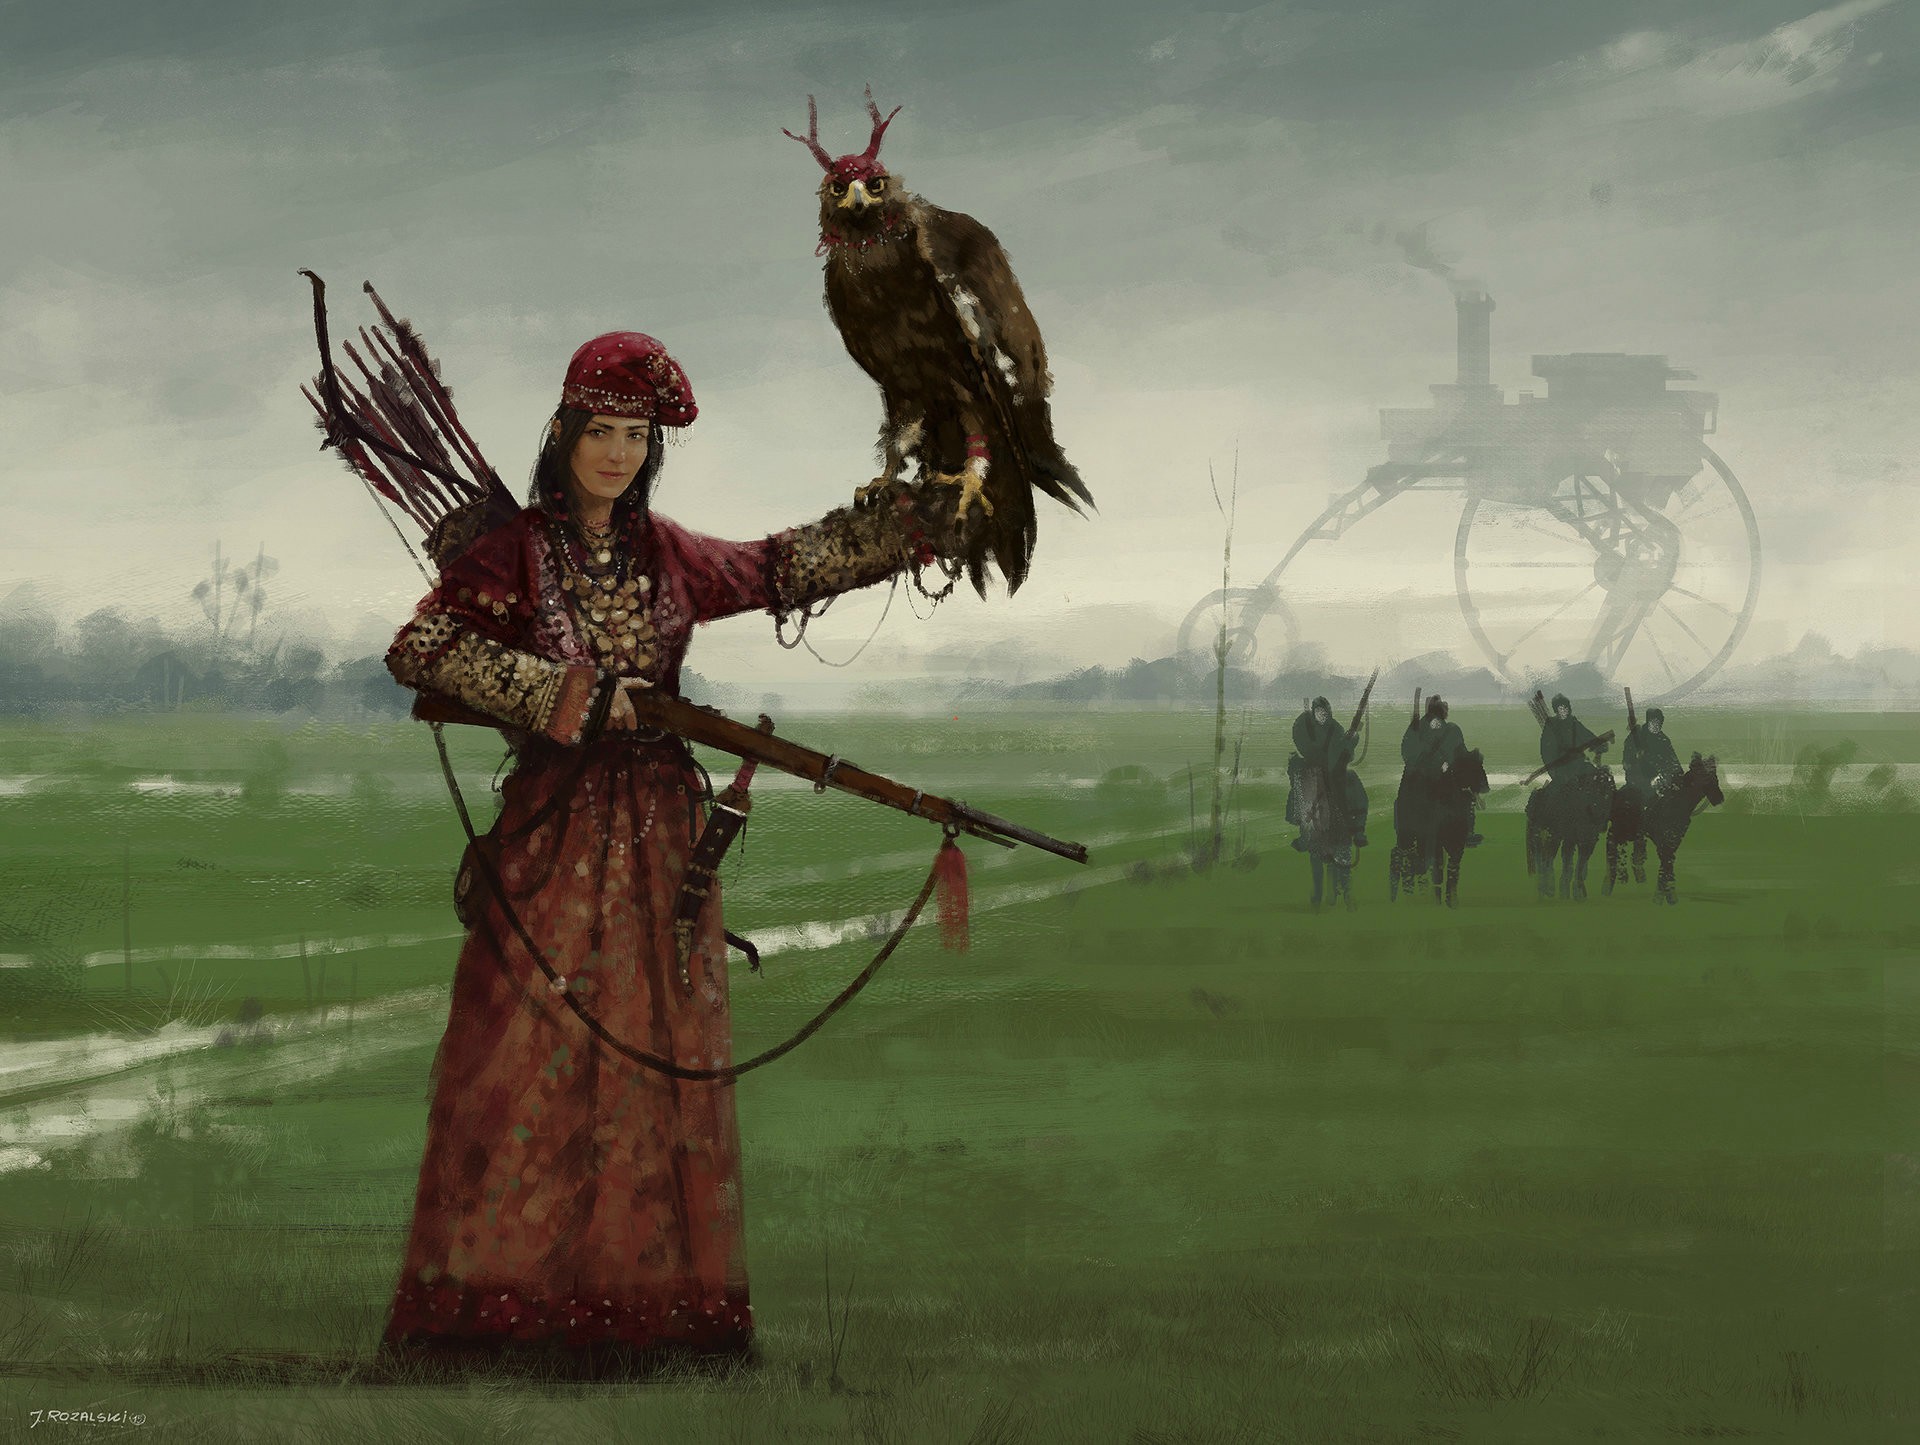 General 1920x1445 digital art women warrior weapon arrows birds army horse landscape painting Jakub Różalski Iron Harvest steampunk